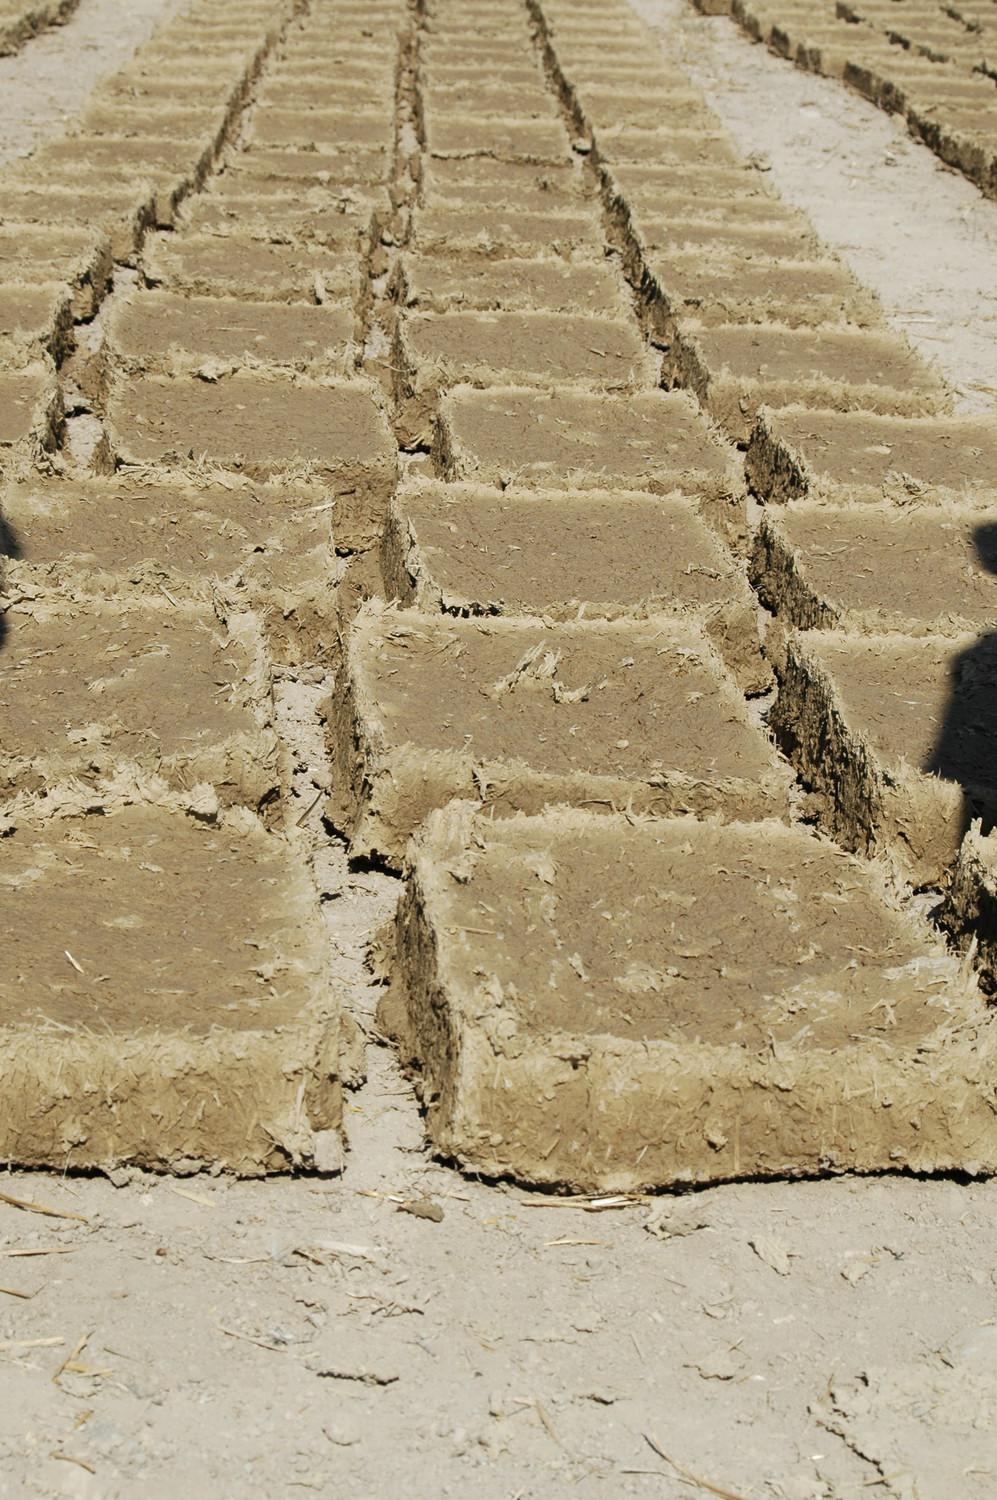 Preparation of mud brick